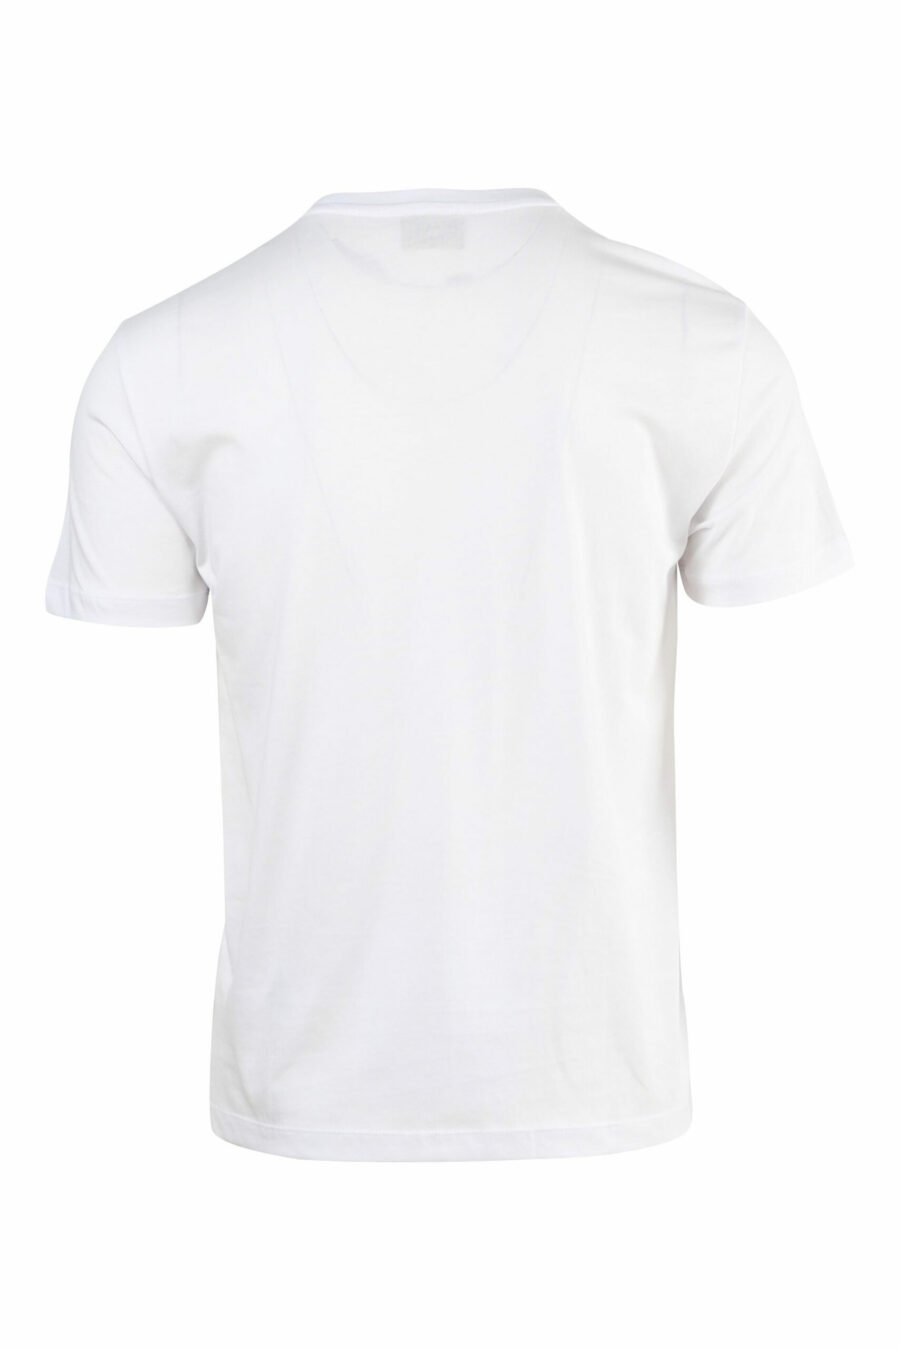 T-shirt branca com mini-logotipo dourado "lux identity" - 8057767515720